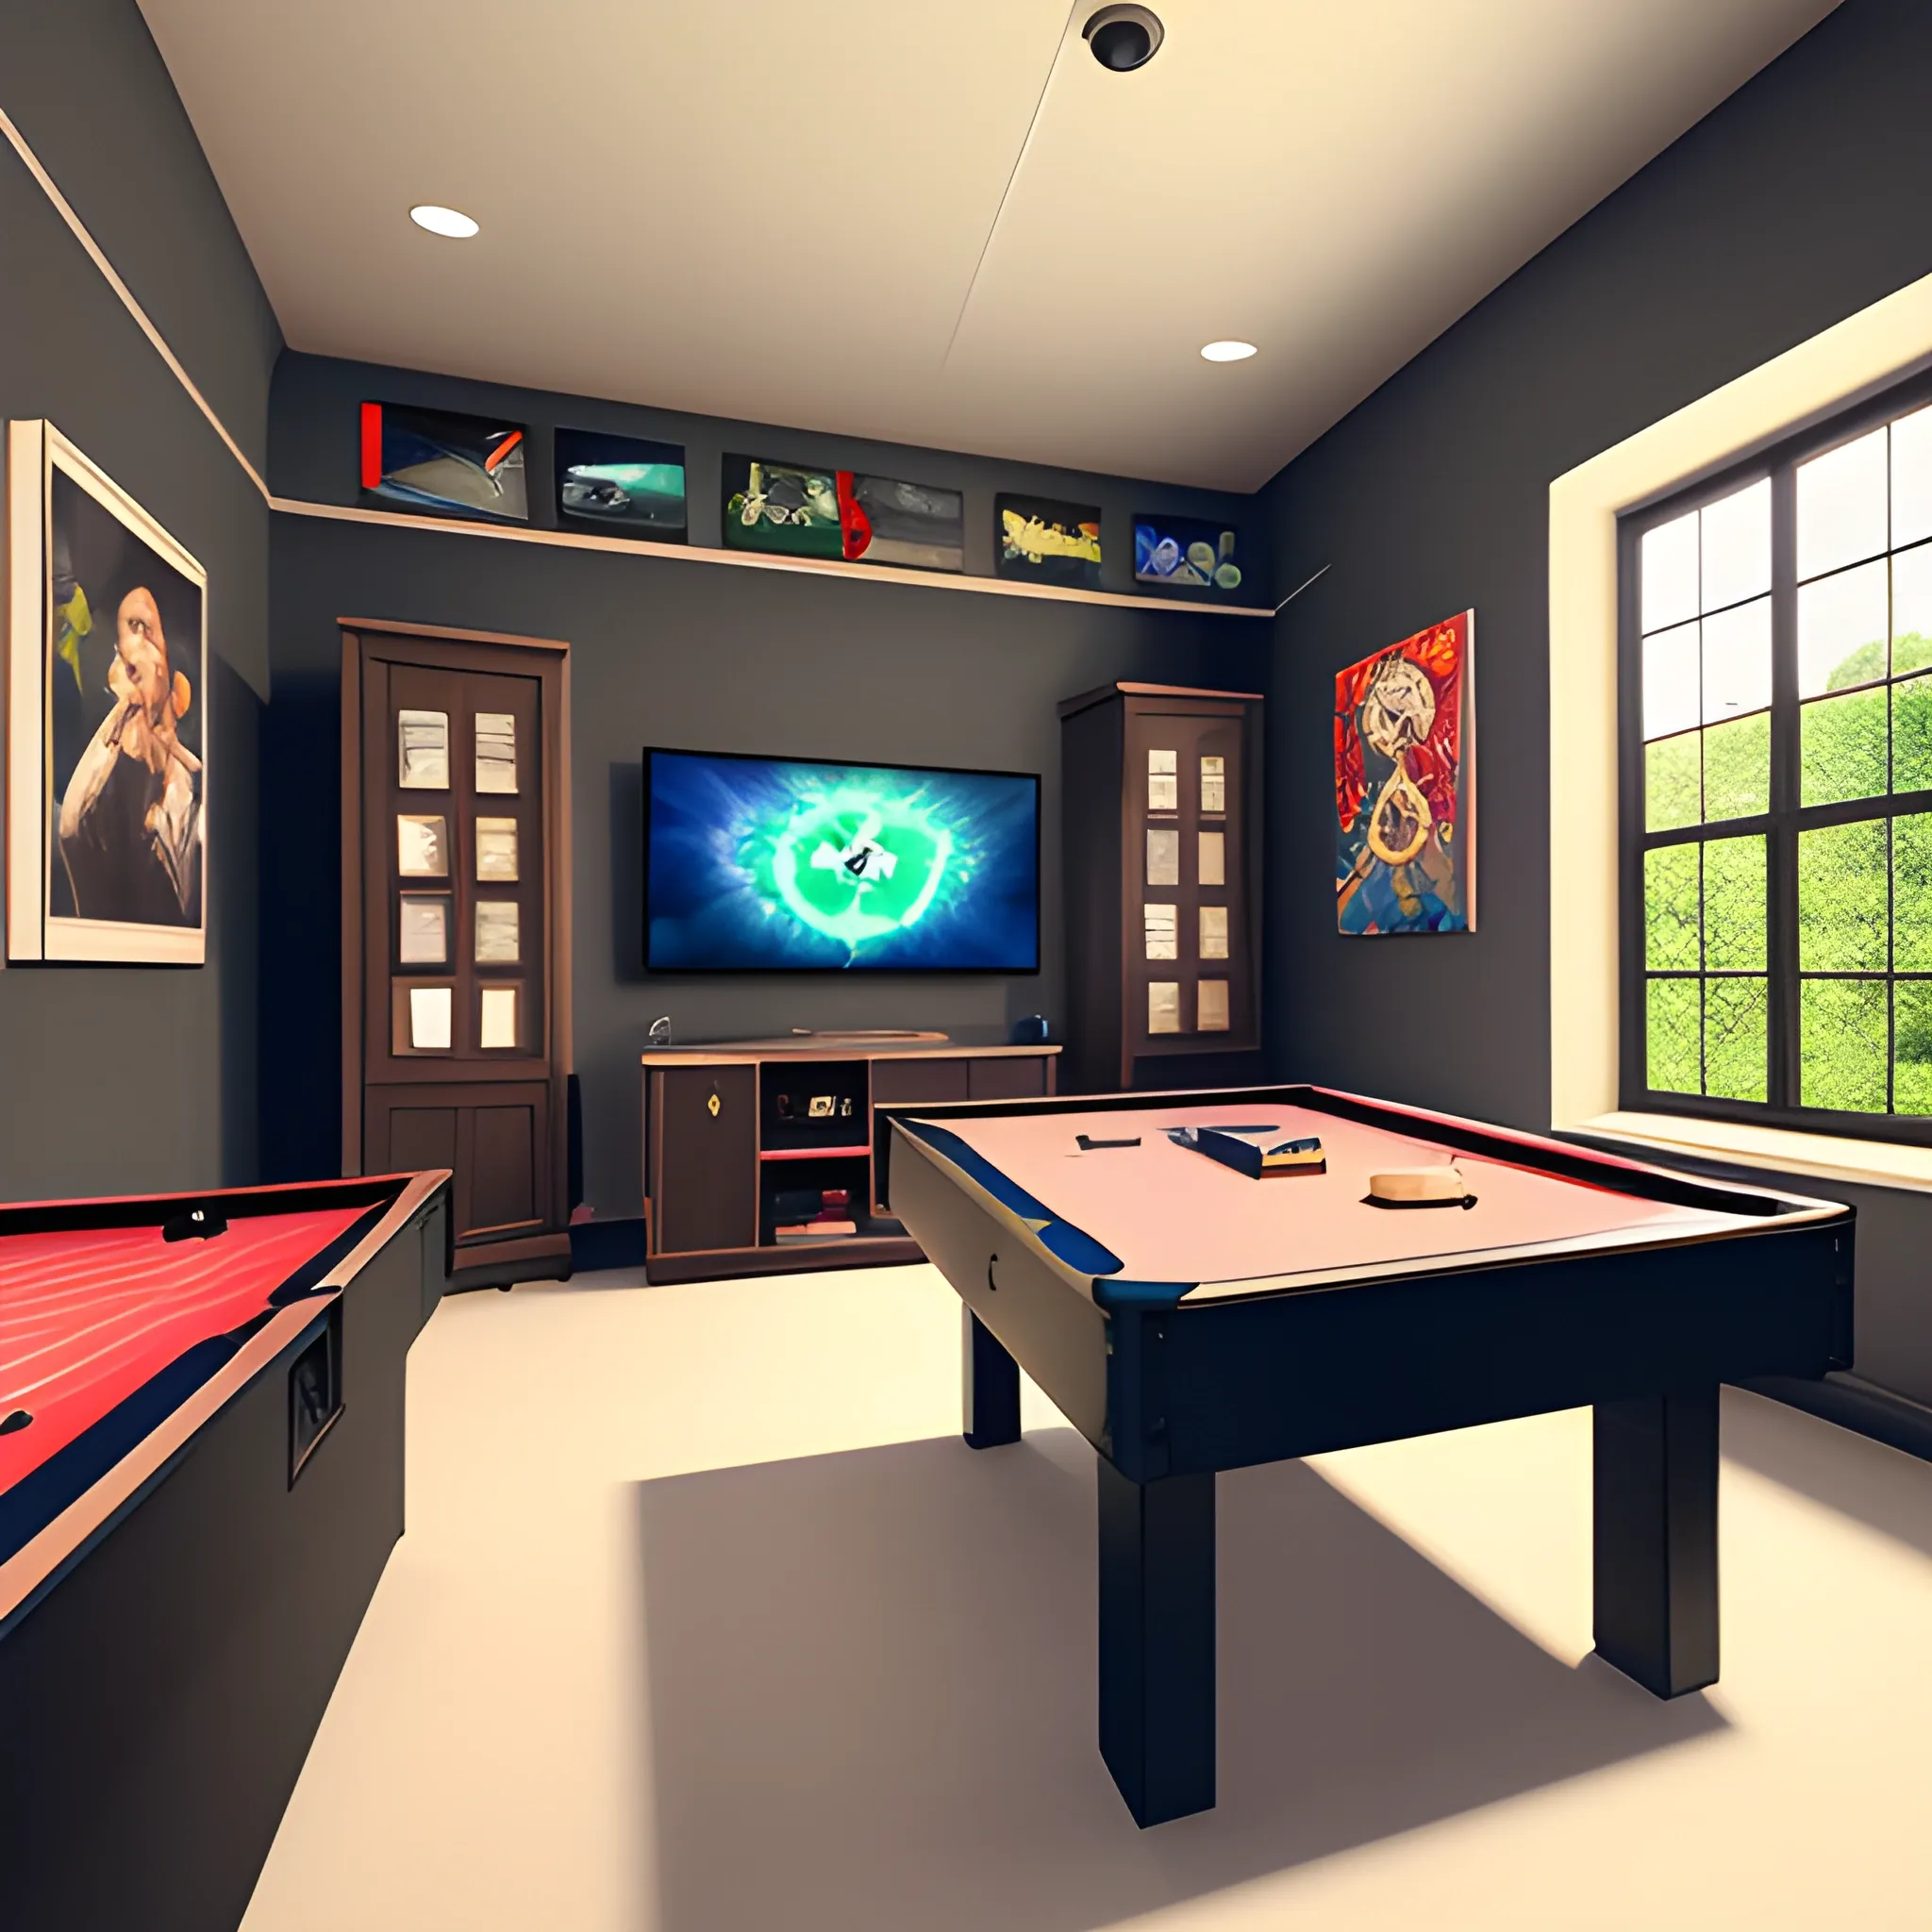 Game room,Modern,Natural lighting,extremely detailed,8K,Hyperrealistic,Artwork